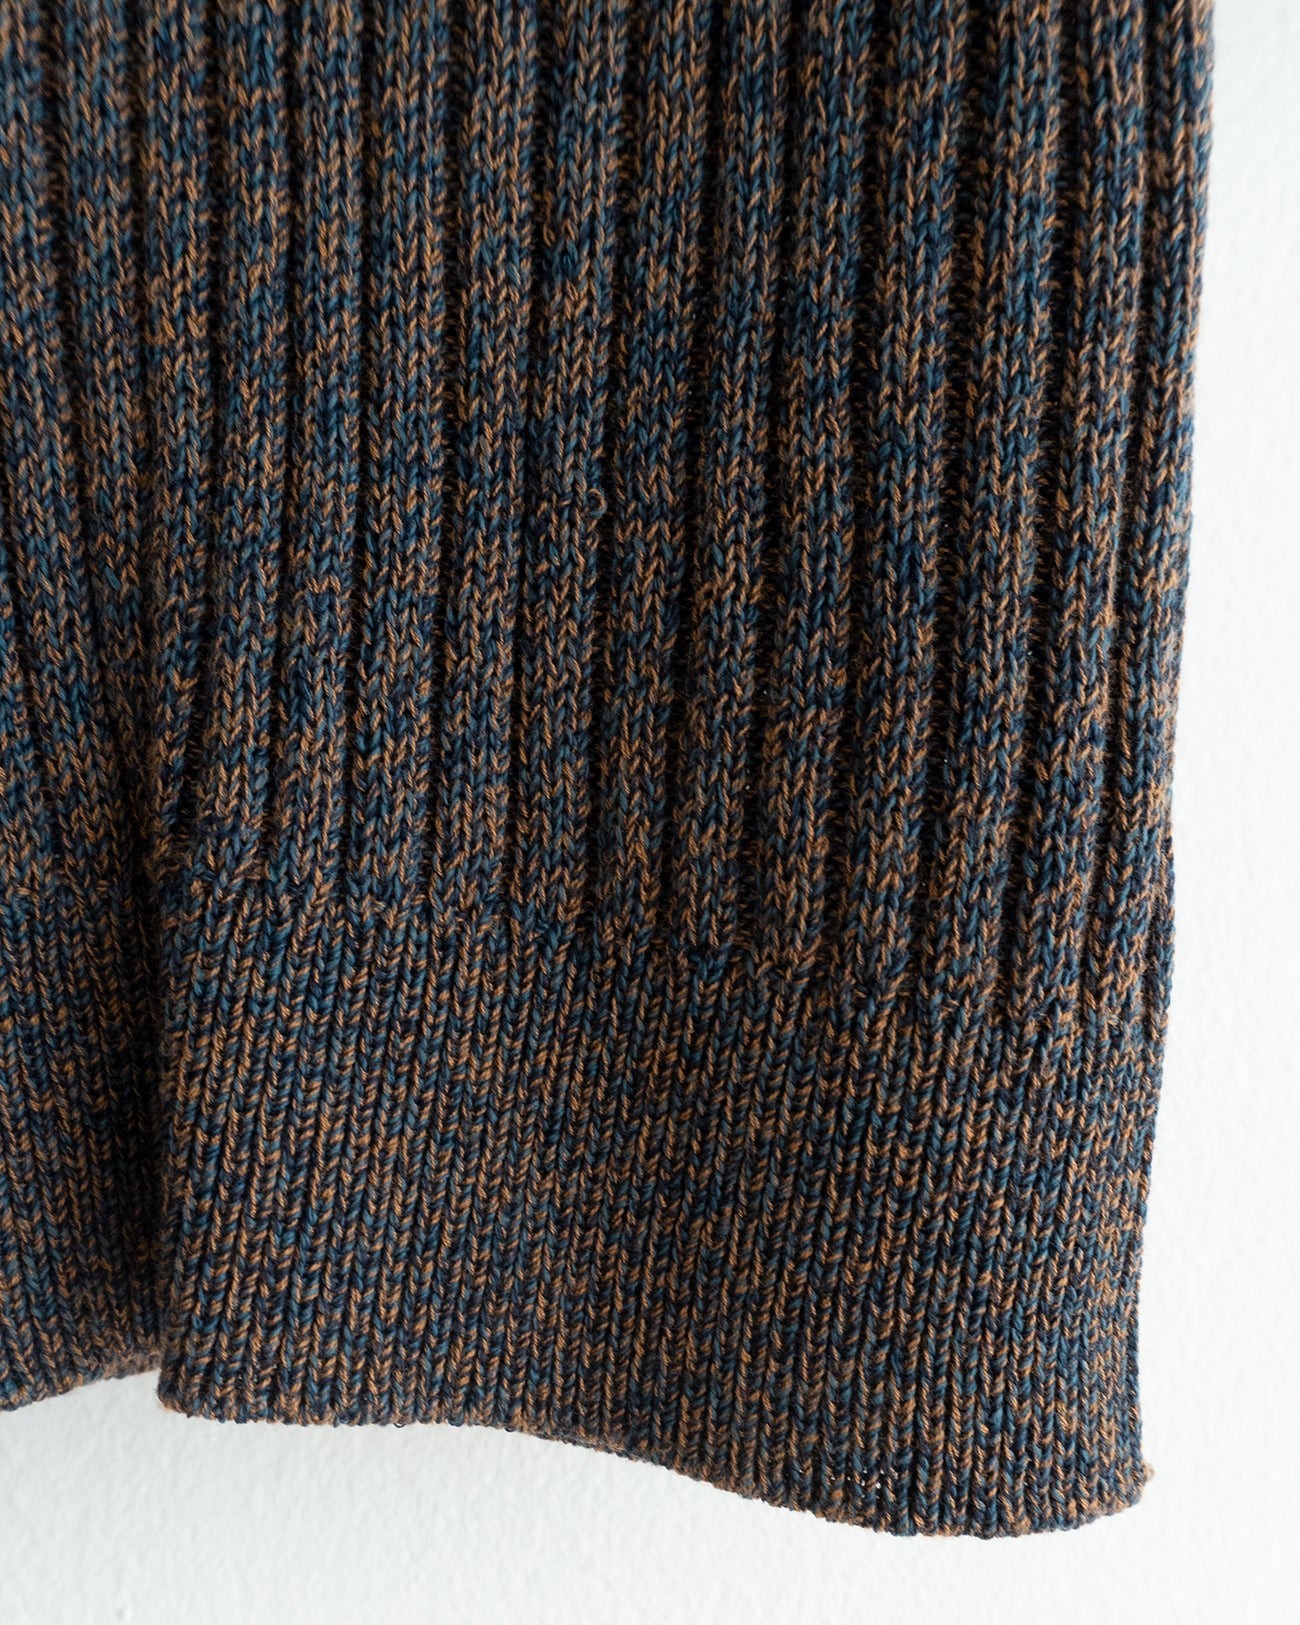 polo shirt knit